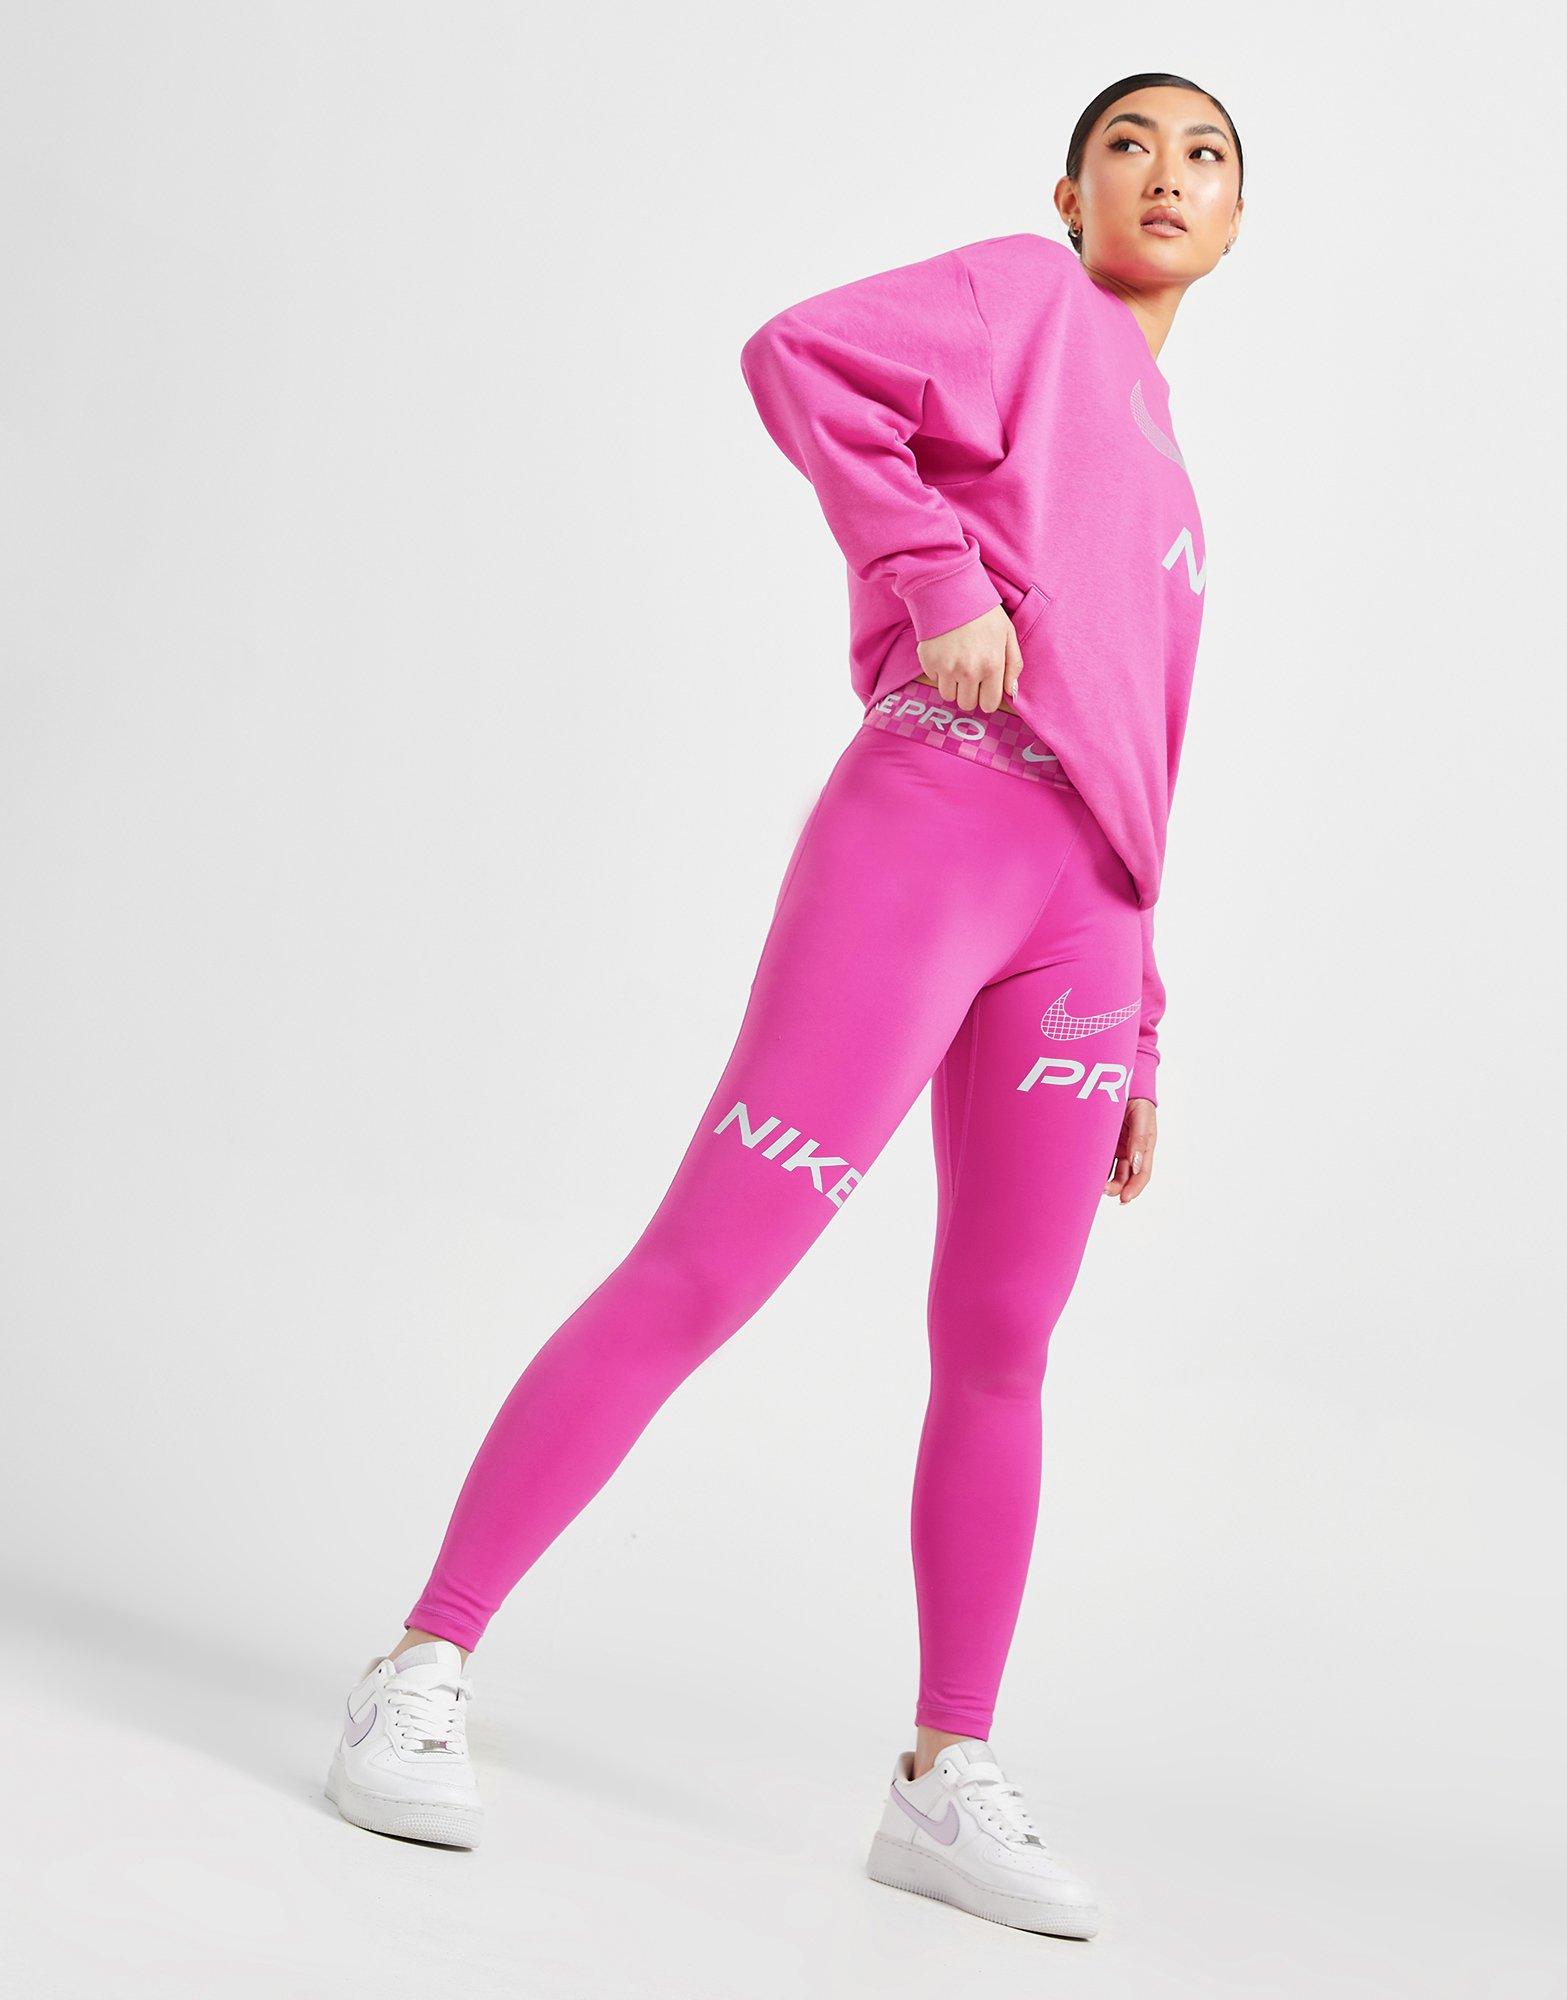 Tommy Hilfiger Sport Women Leggings Full Length High Rise Hot Pink NWT Free  Ship